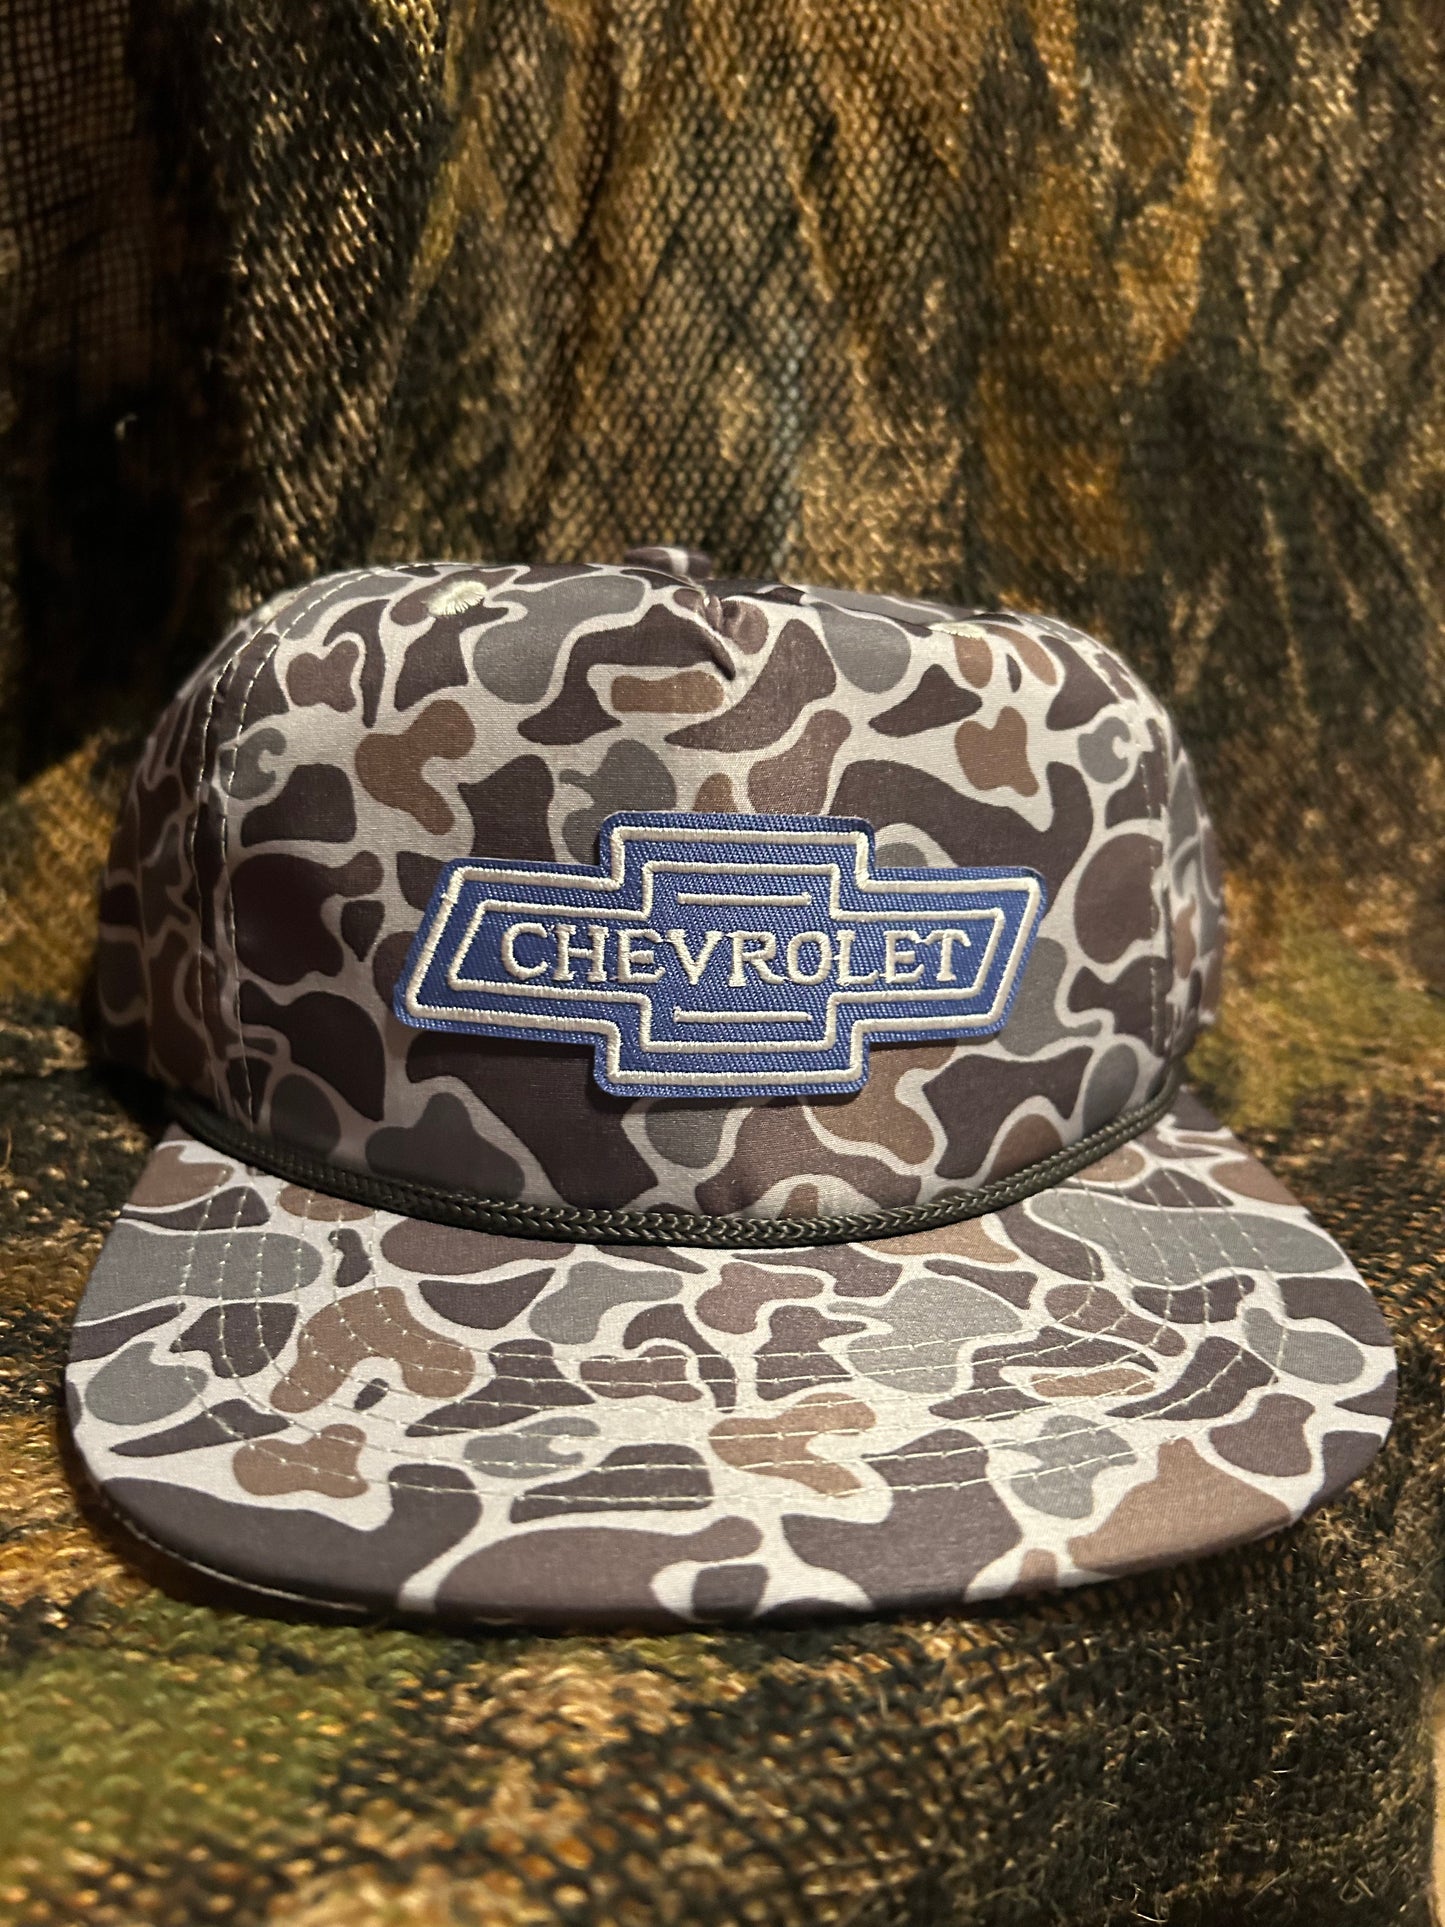 Chevrolet reto Smokeshow Camo SnapBack hat